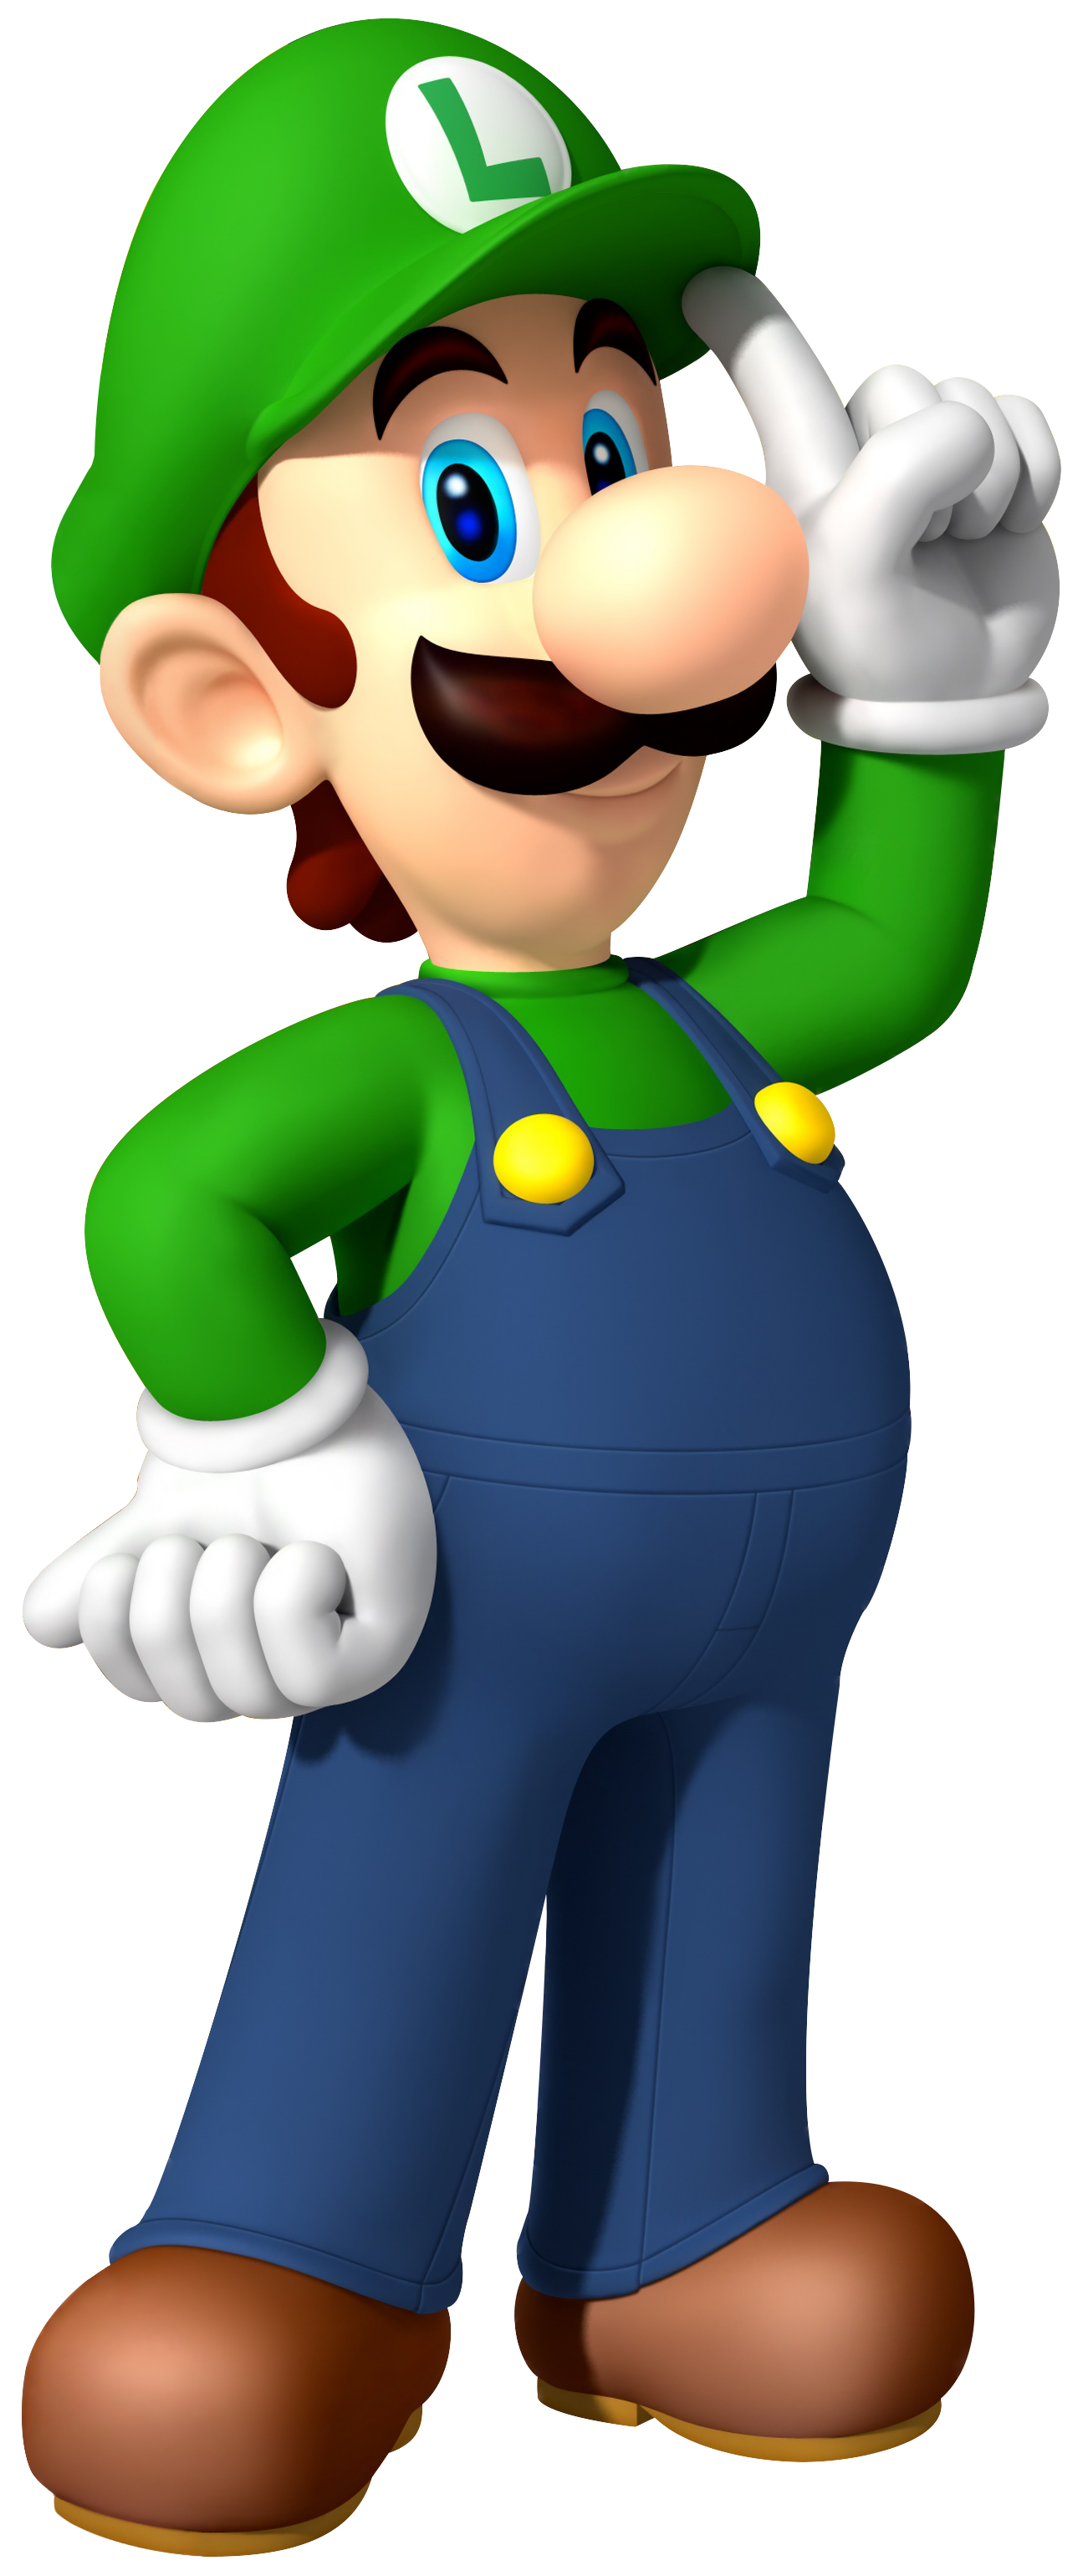 Luigi's Mansion 3 - Super Mario Wiki, the Mario encyclopedia